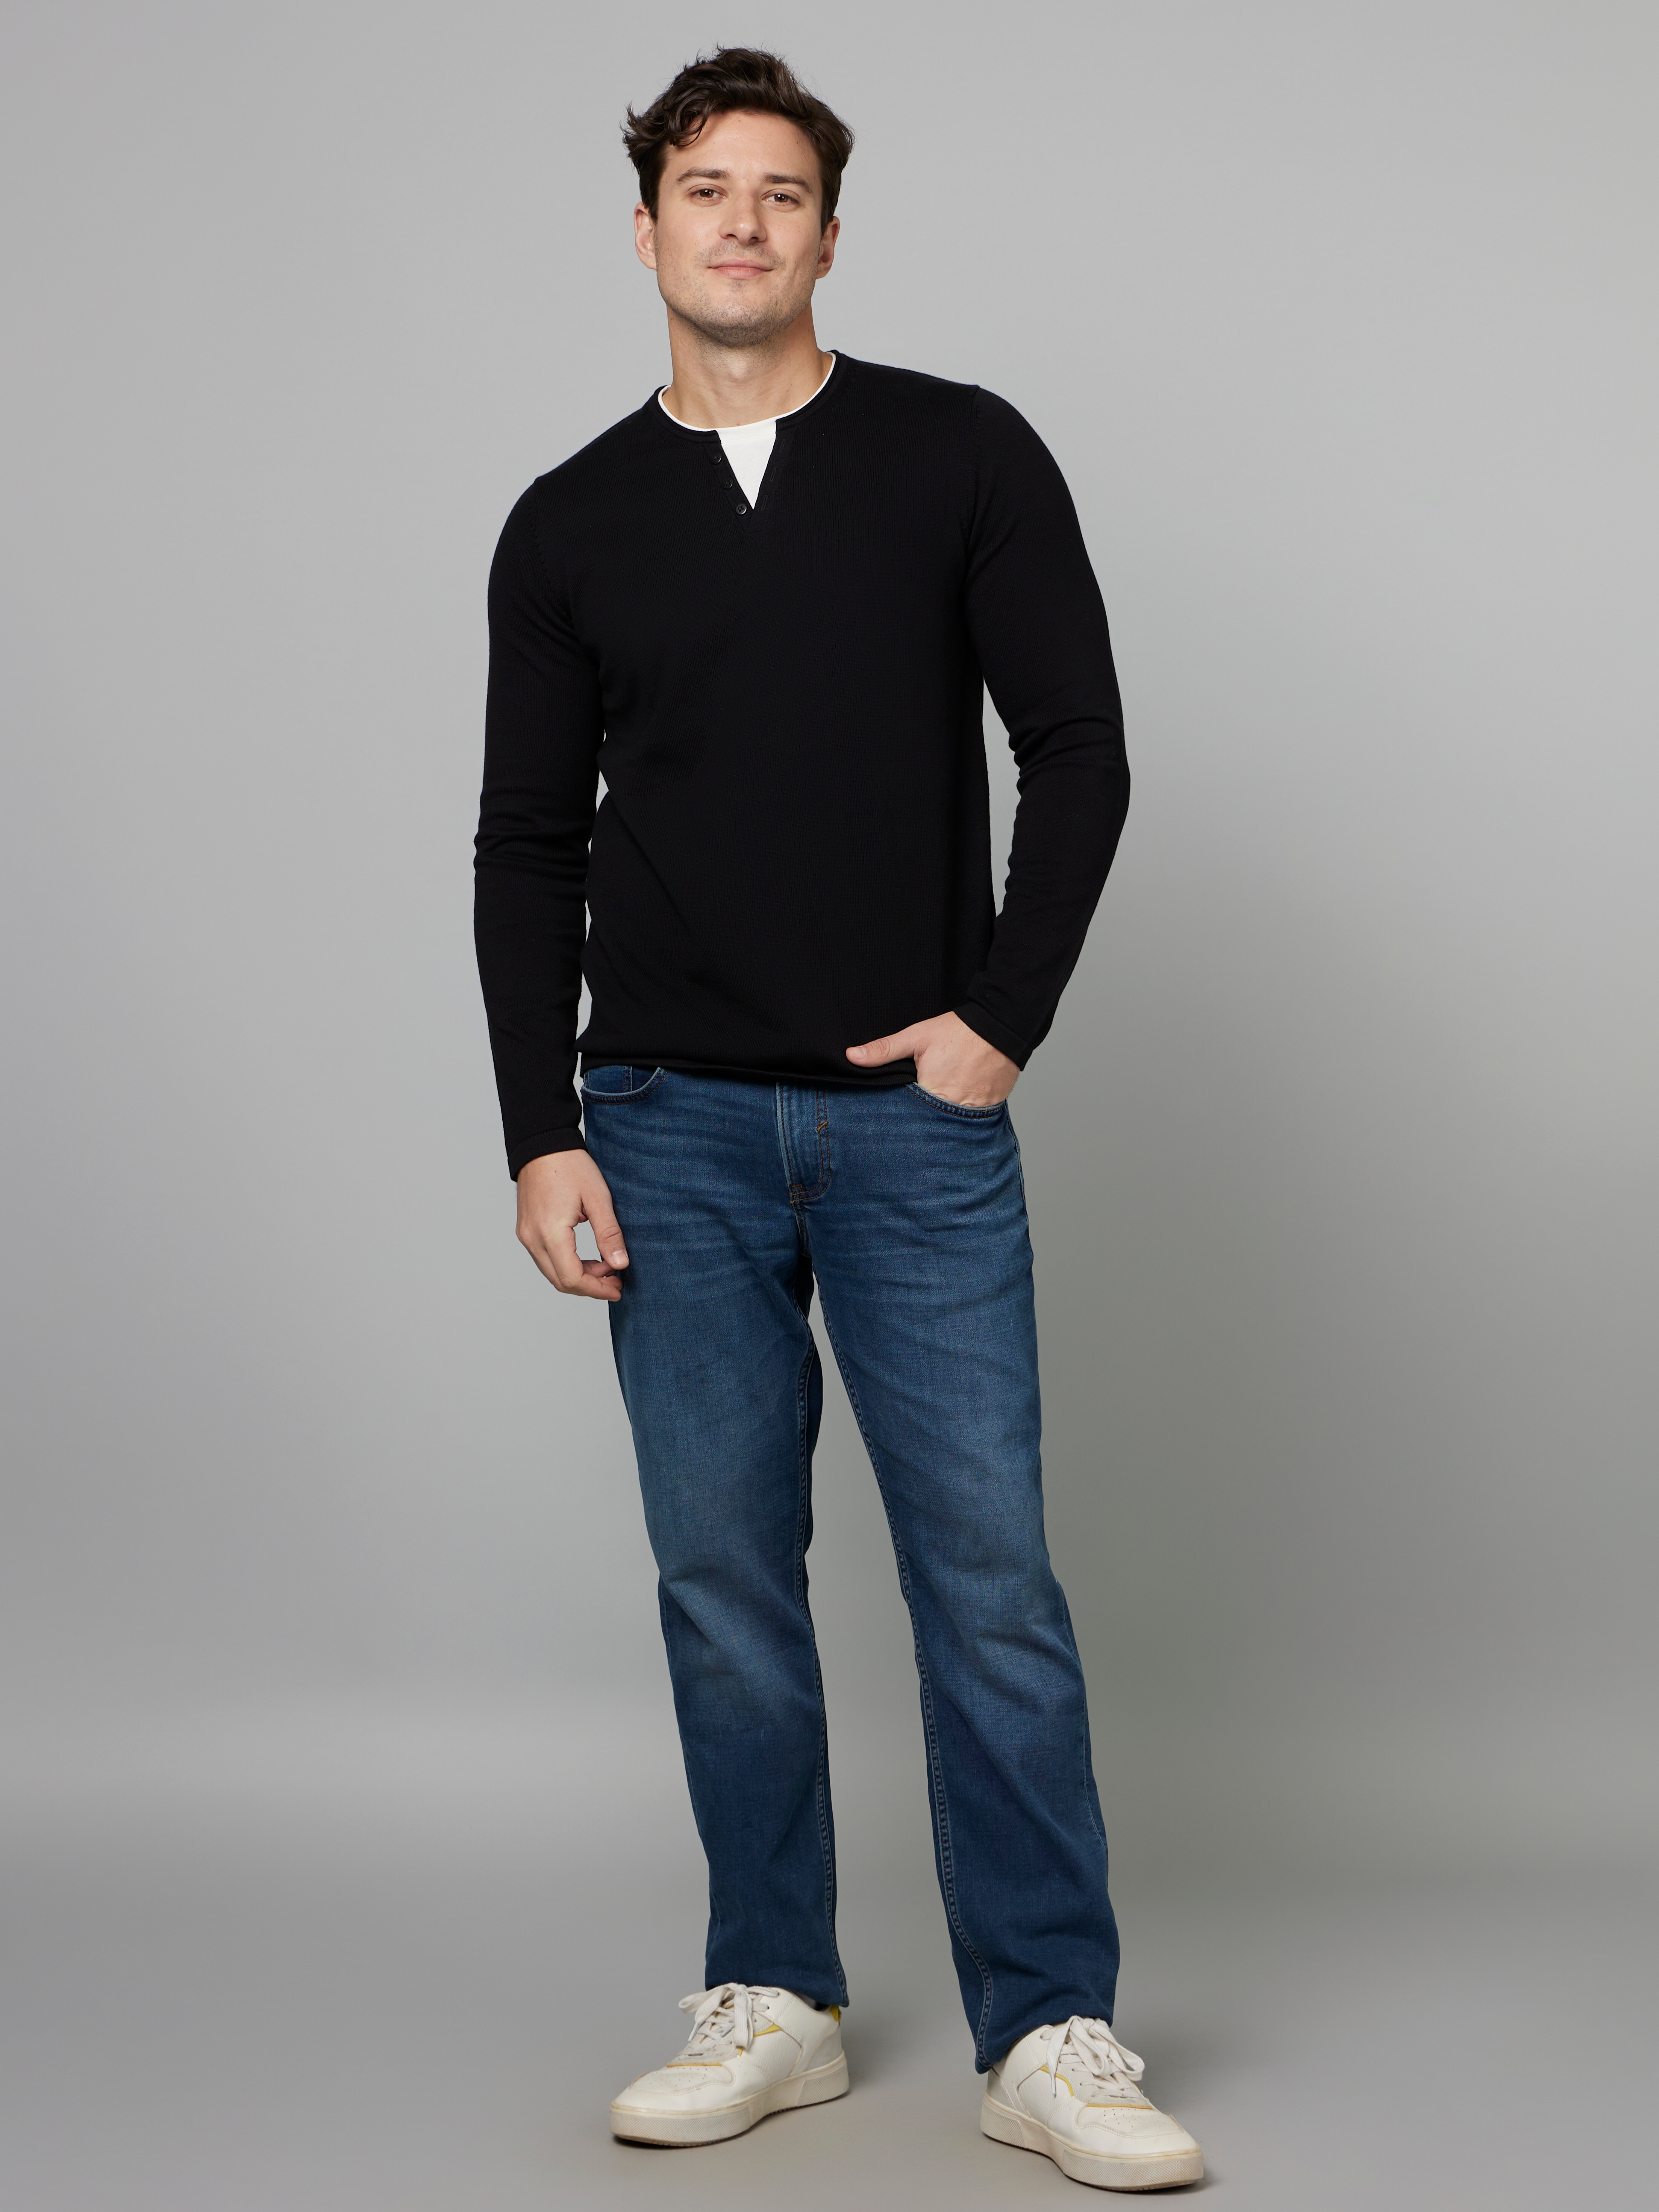 Men's Black Solid Sweaters